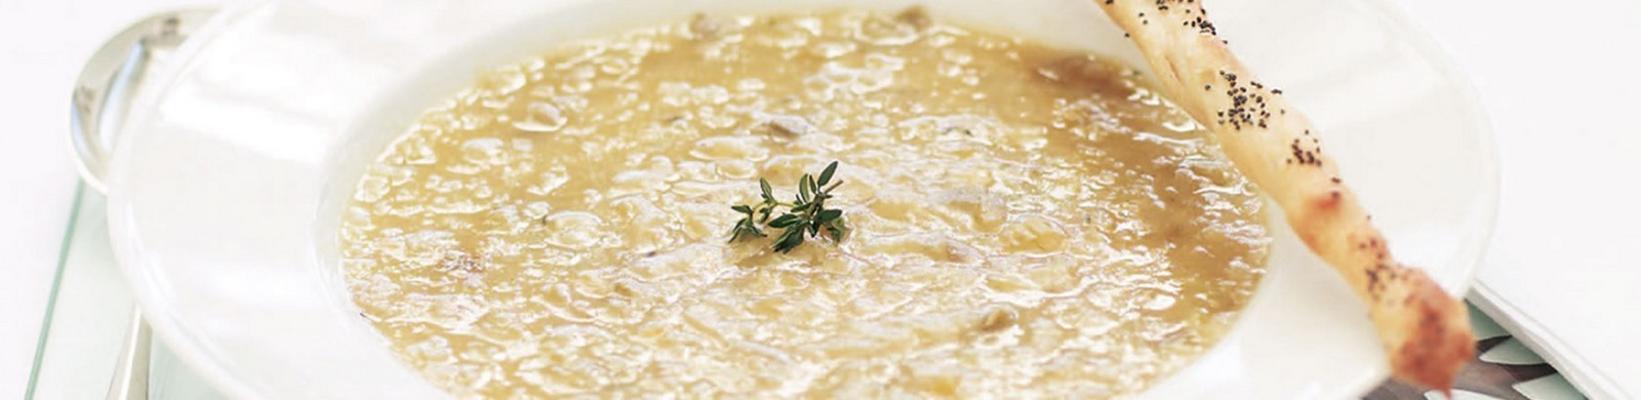 soup of leek, potato and roasted garlic